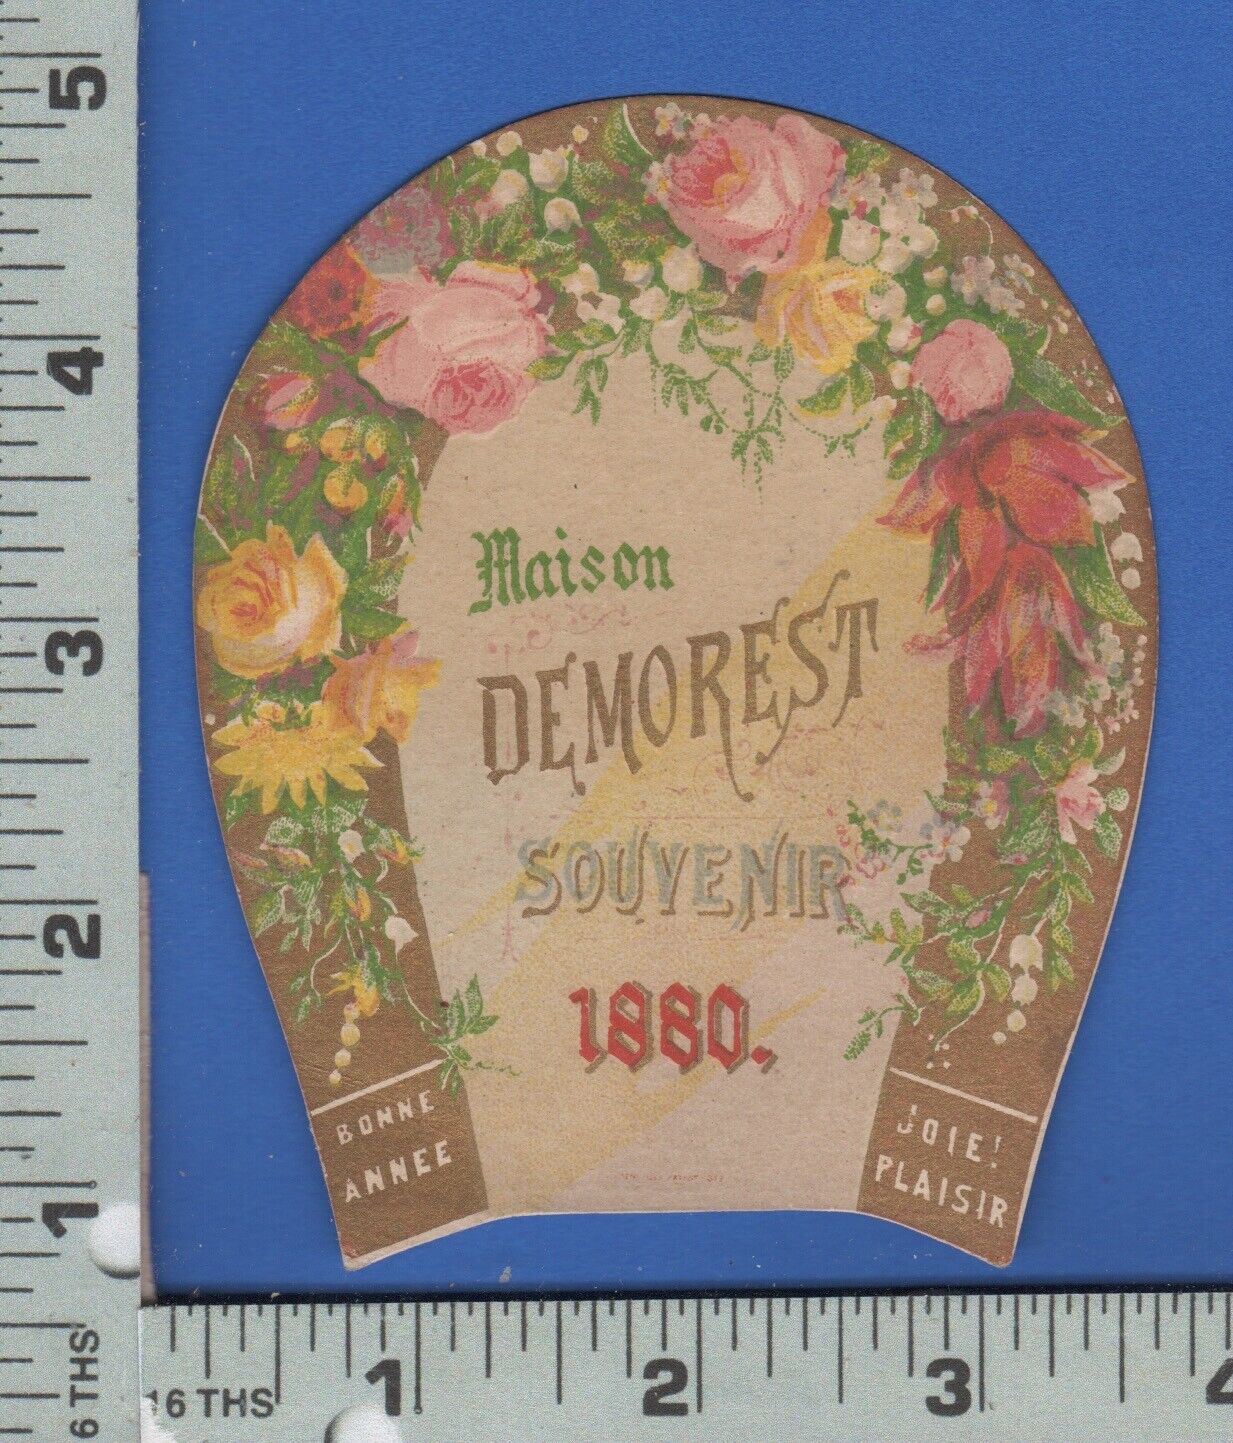 D703 Maison Demorest’s Quarterly Journal clothes pattern diecut horseshoe tdcard